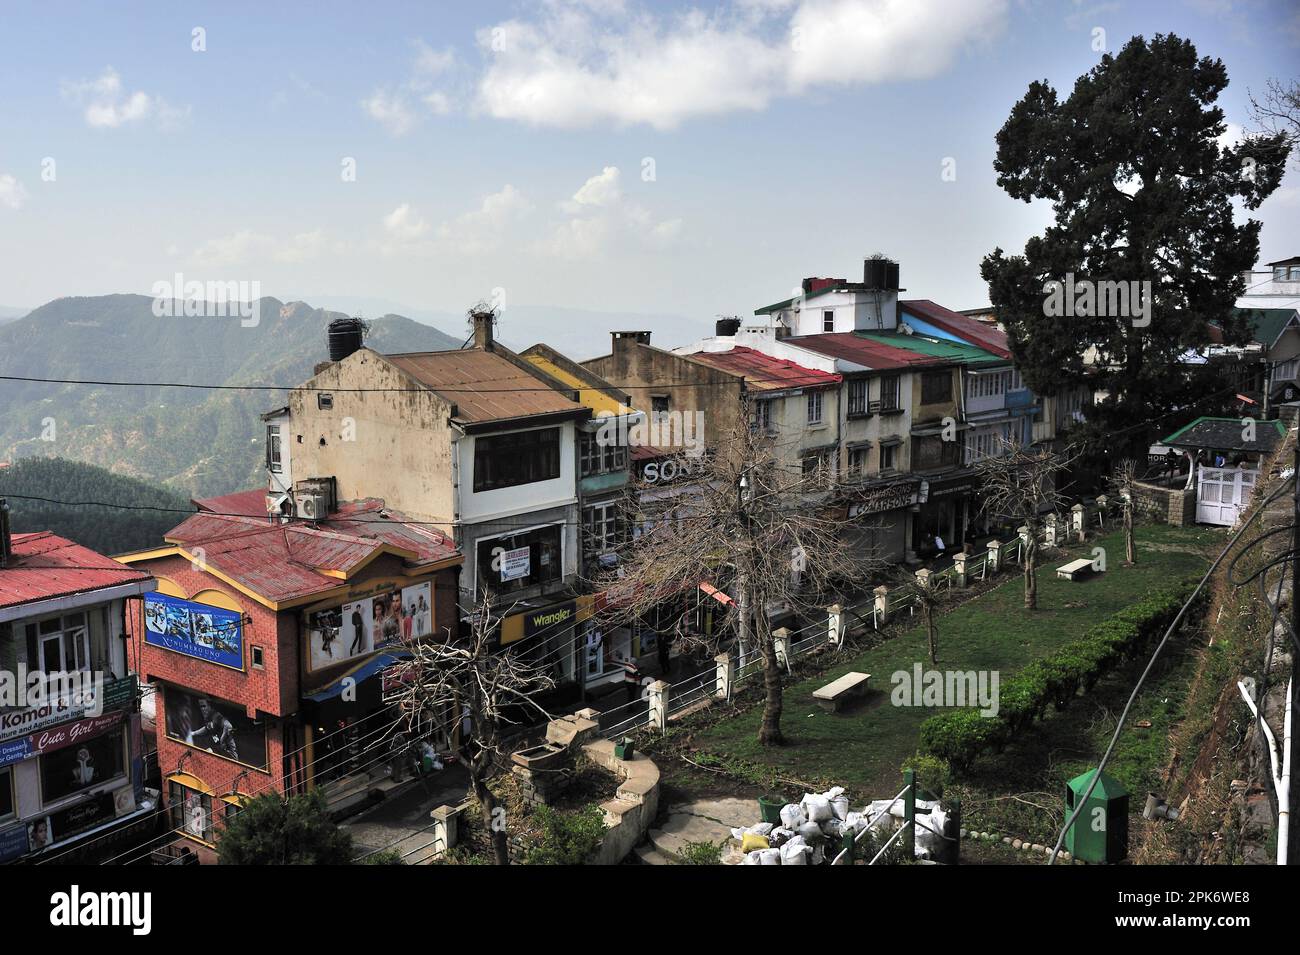 Shops on Mall road of city Shimla state Himachal Pradesh India Stock Photo